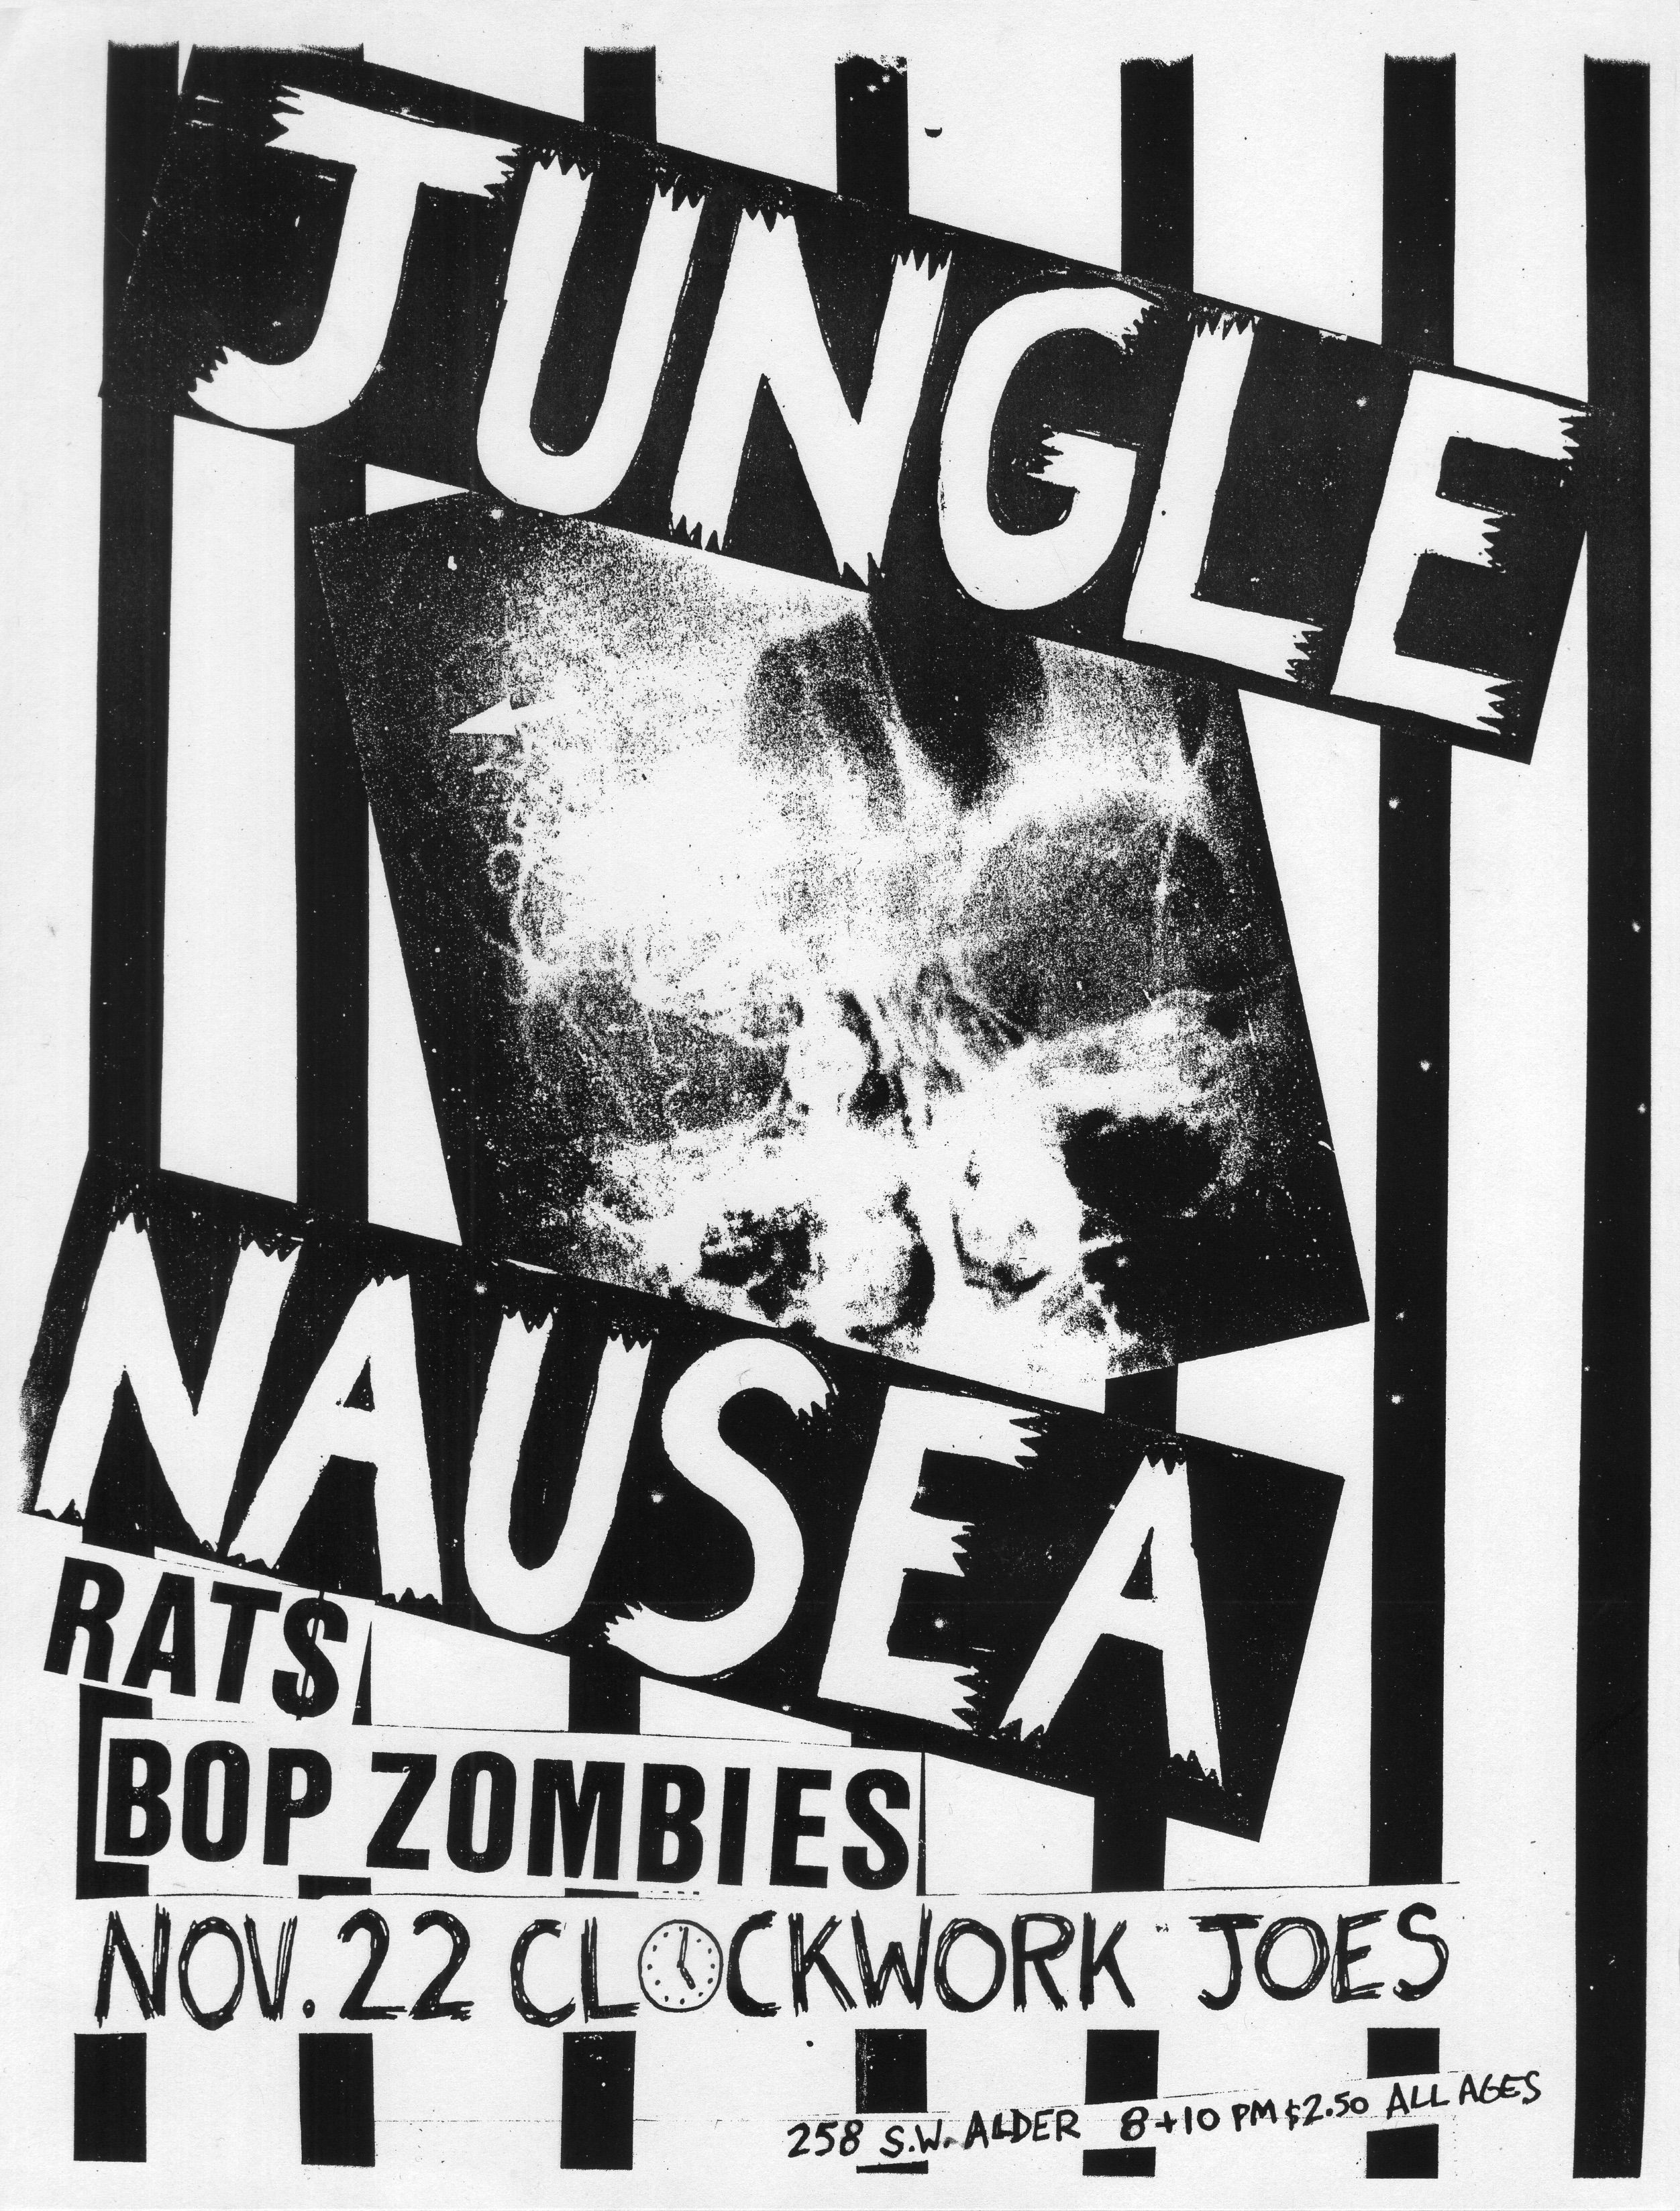 MXP-43.9 Jungle Nausea 1980 Clockwork Joes  Nov 22 Concert Poster